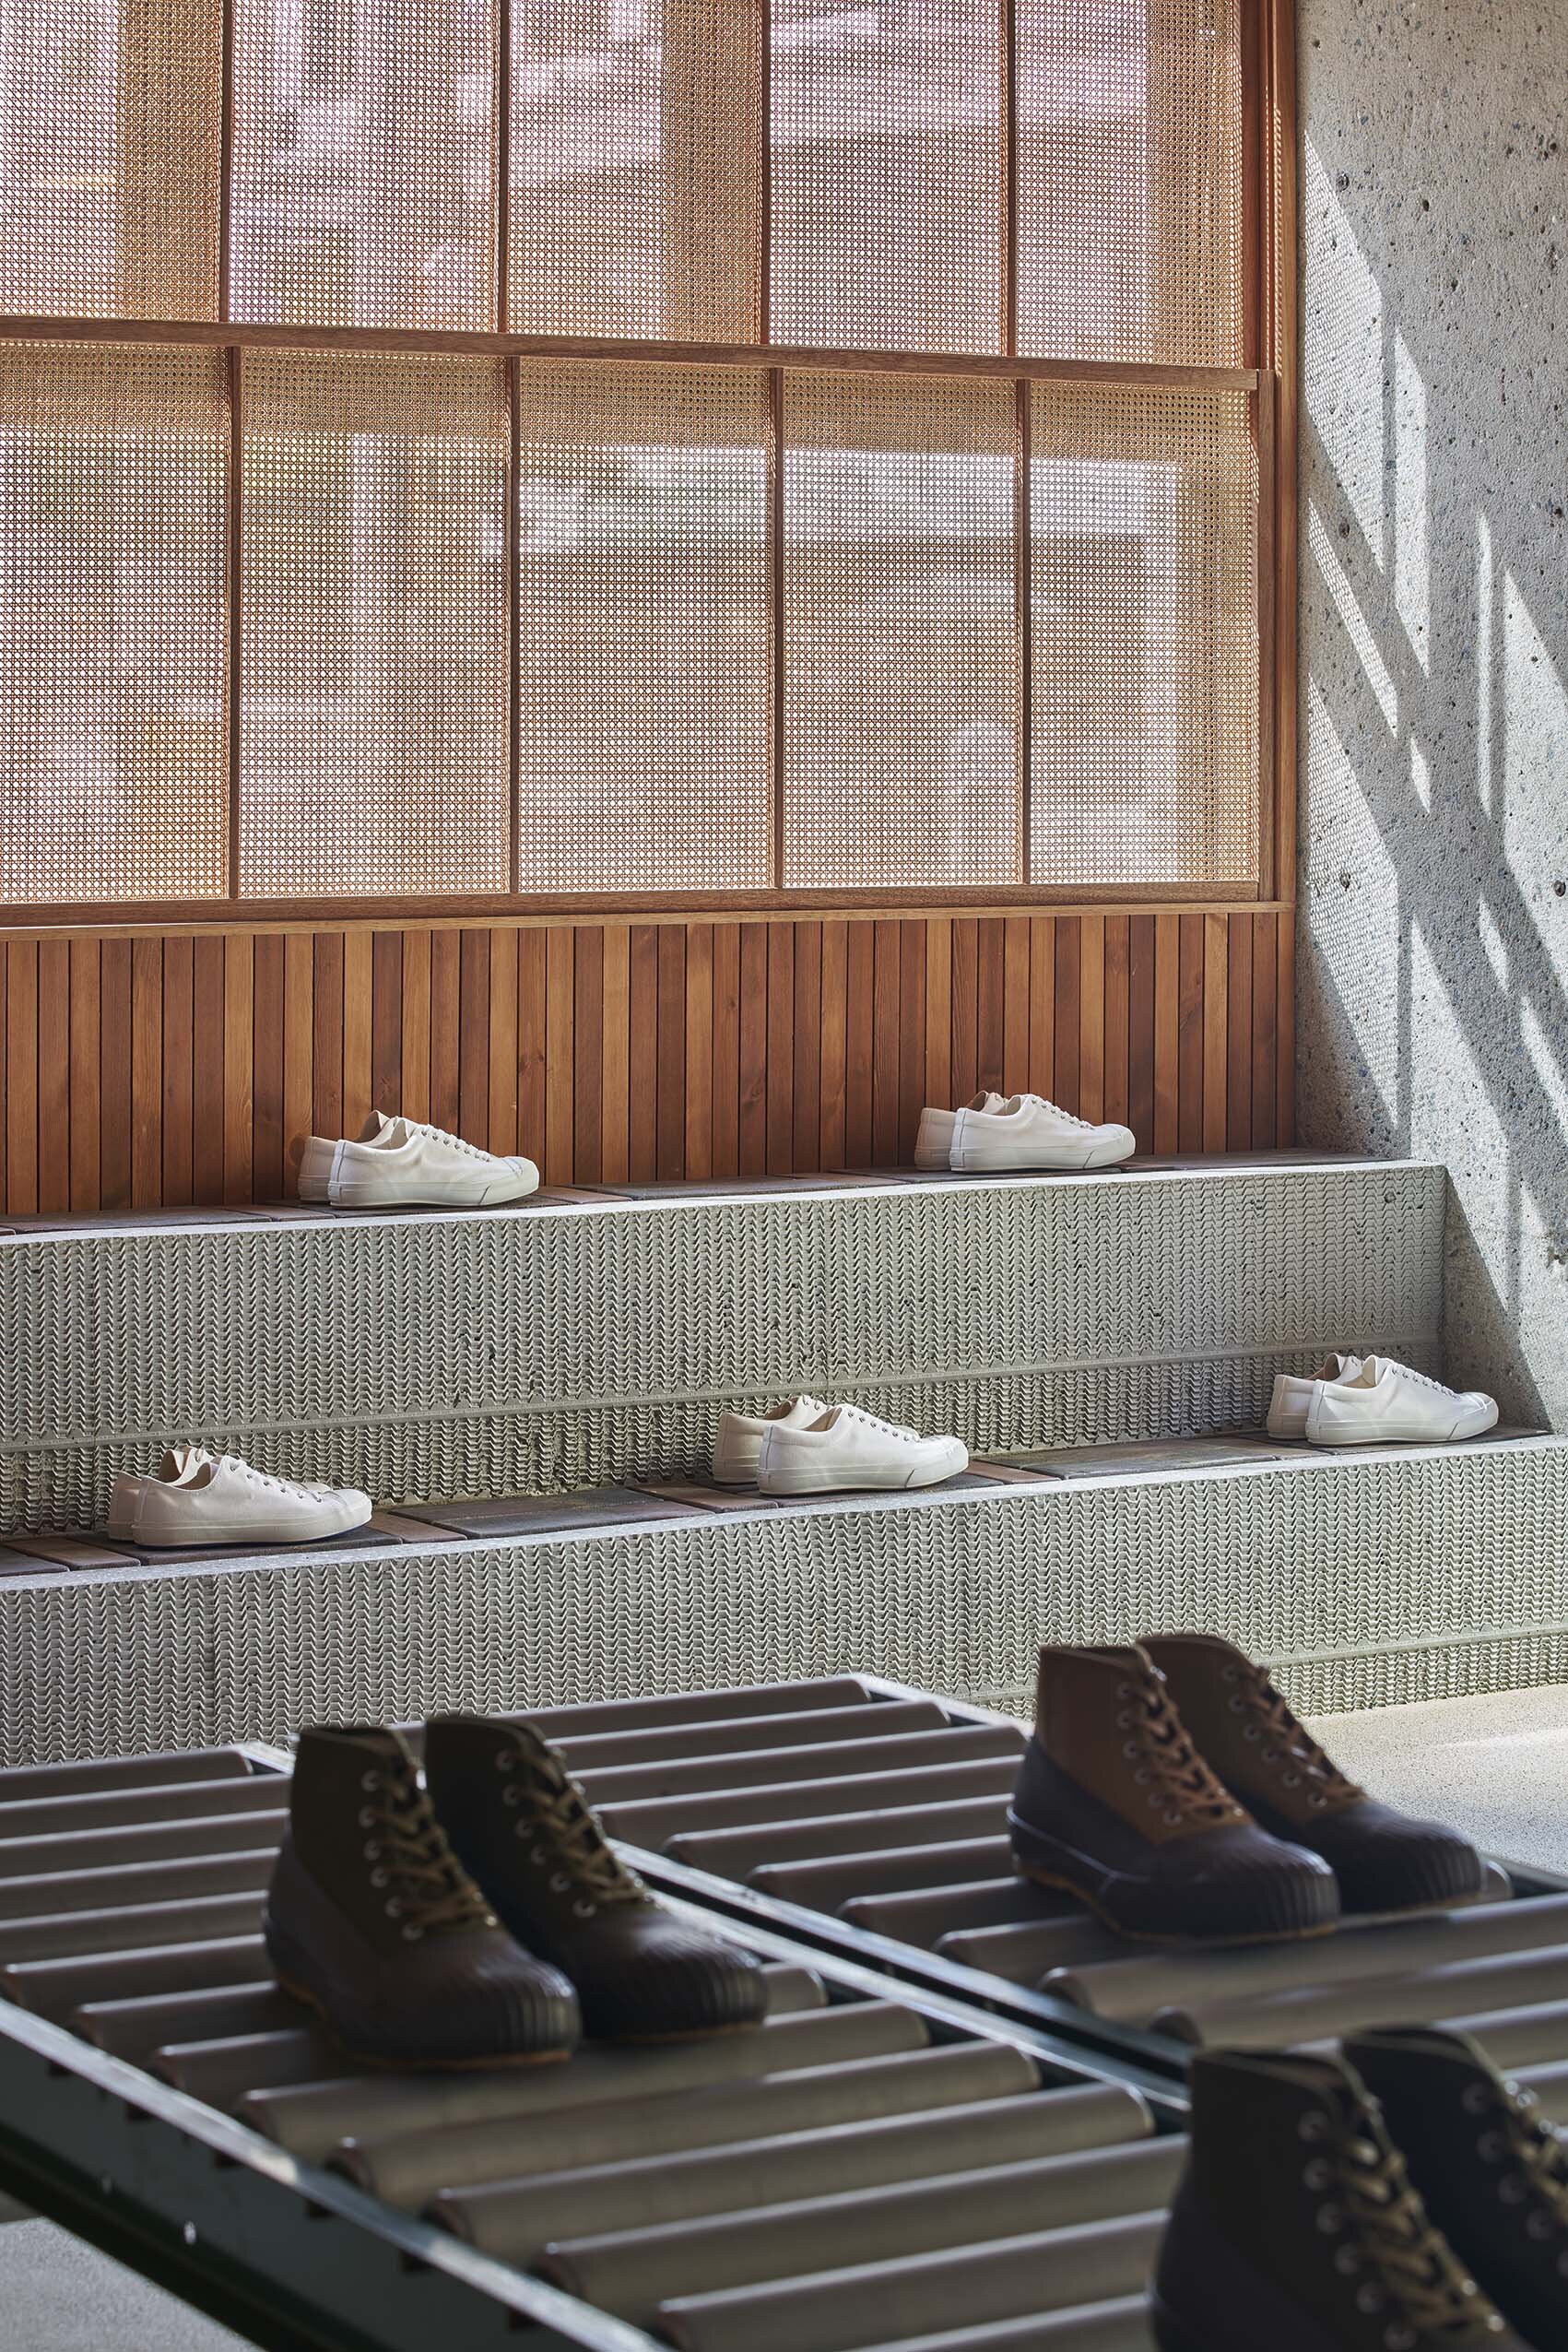 toru-shimokawa-architects-also-moonstar-interior-design-magazine-idreit-09.jpg